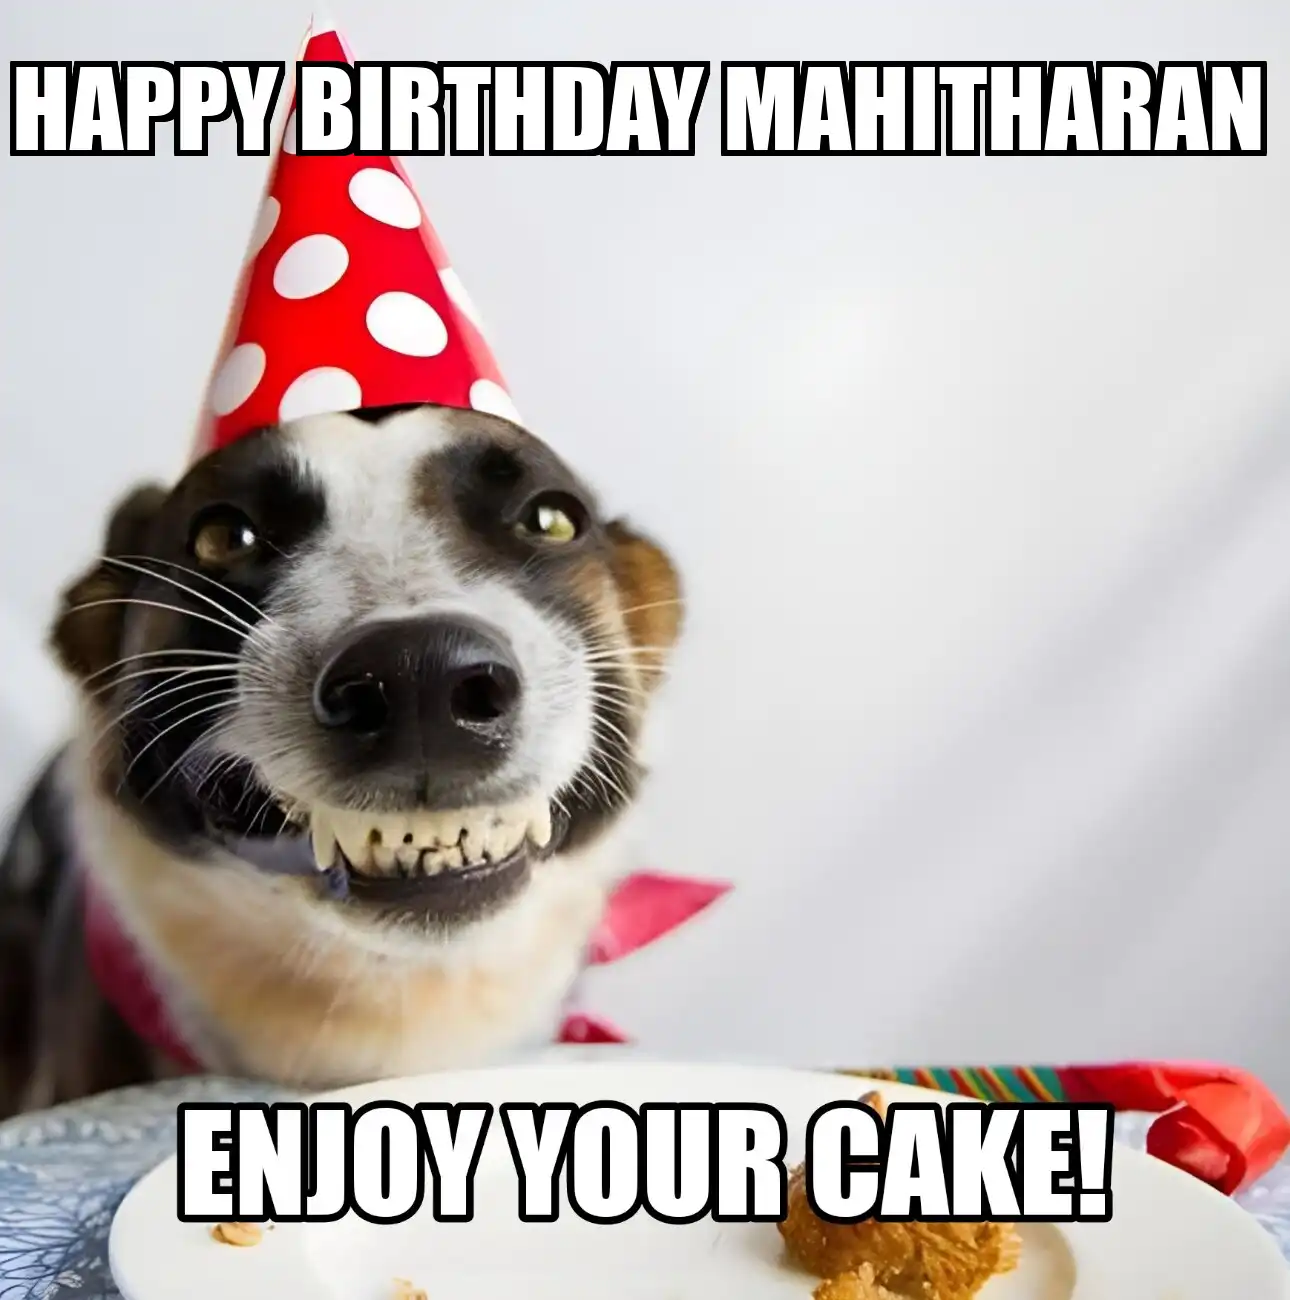 Happy Birthday Mahitharan Enjoy Your Cake Dog Meme